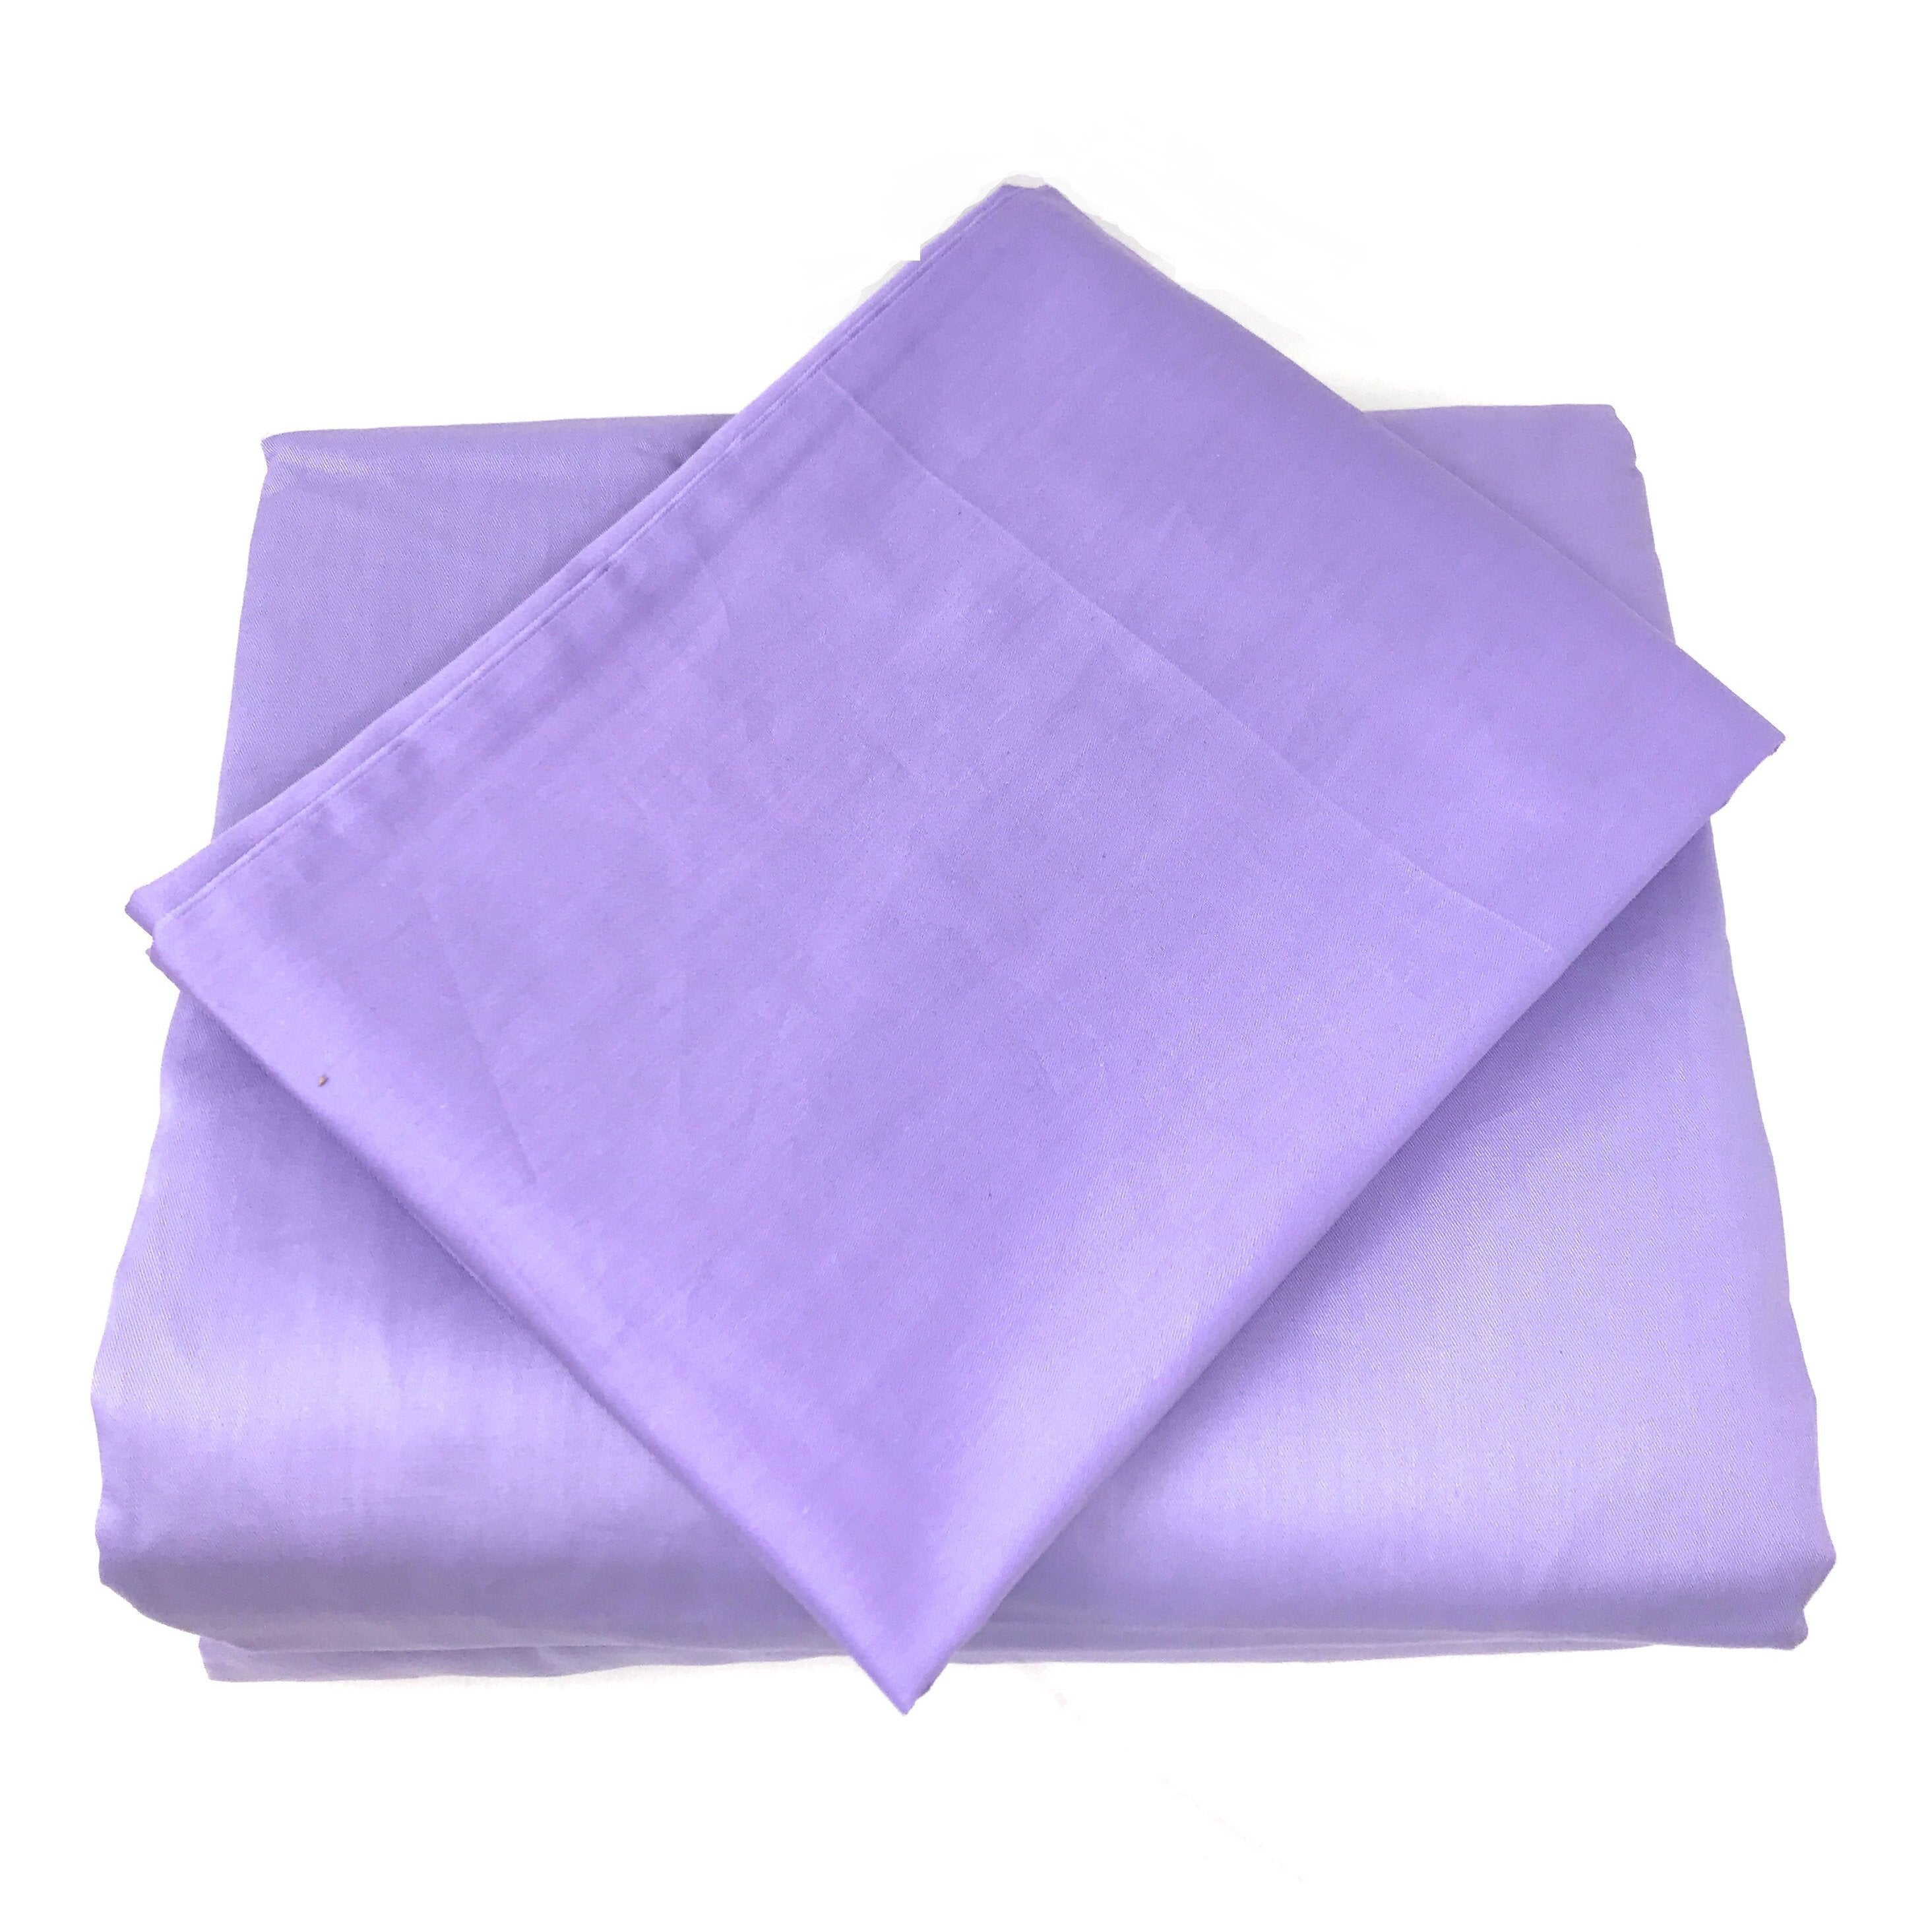 Tache Cotton Lavender Purple Fitted Sheet (BS3PC-P) - Tache Home Fashion